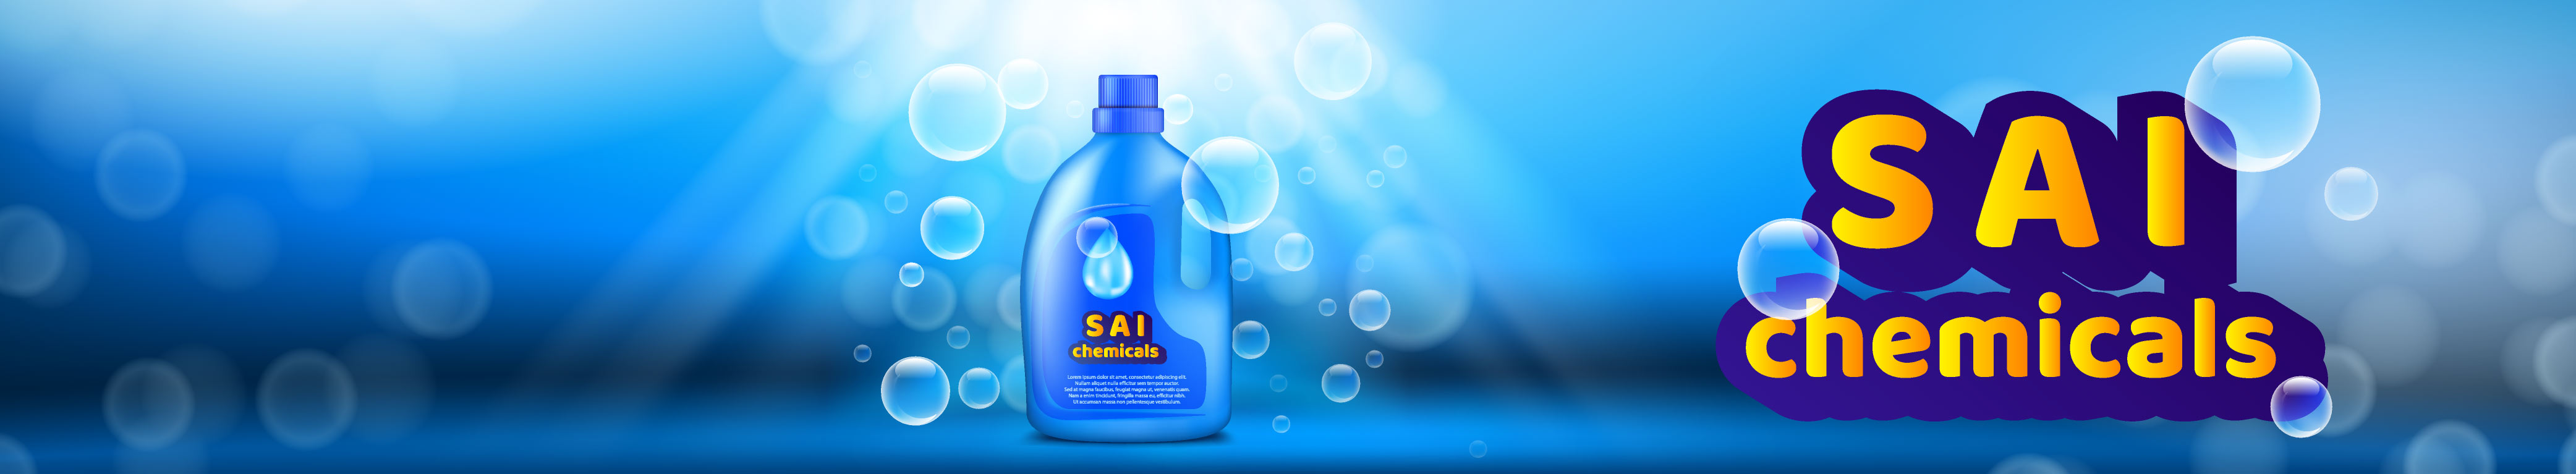 SAI CHEMICALS Banner Image